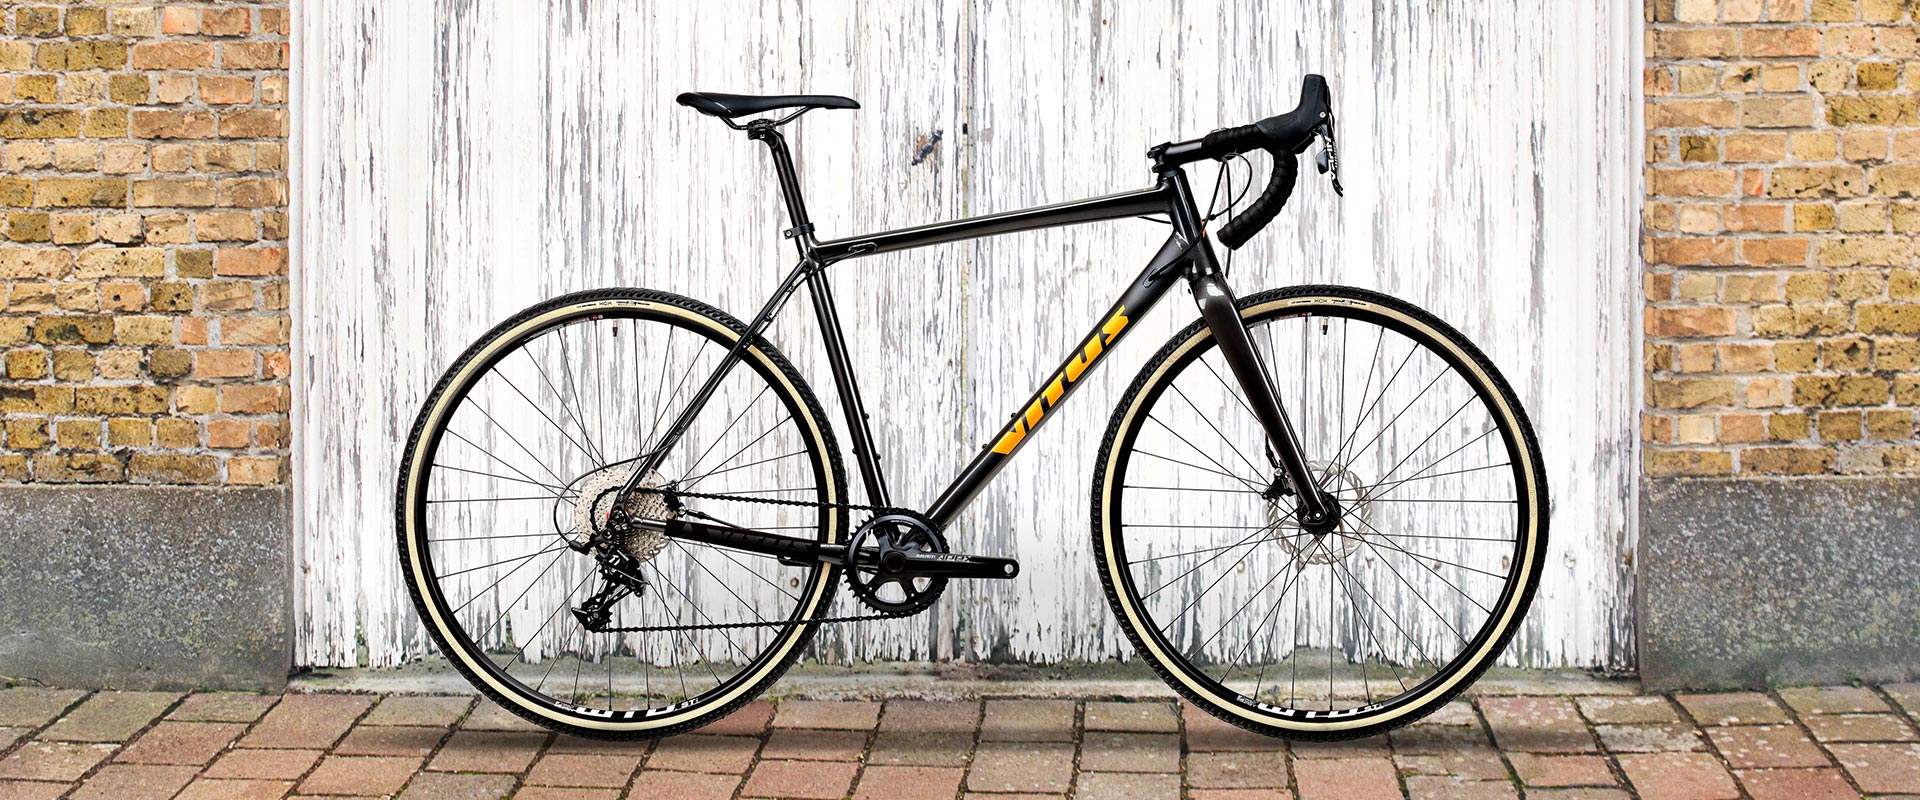 56cm bike frame